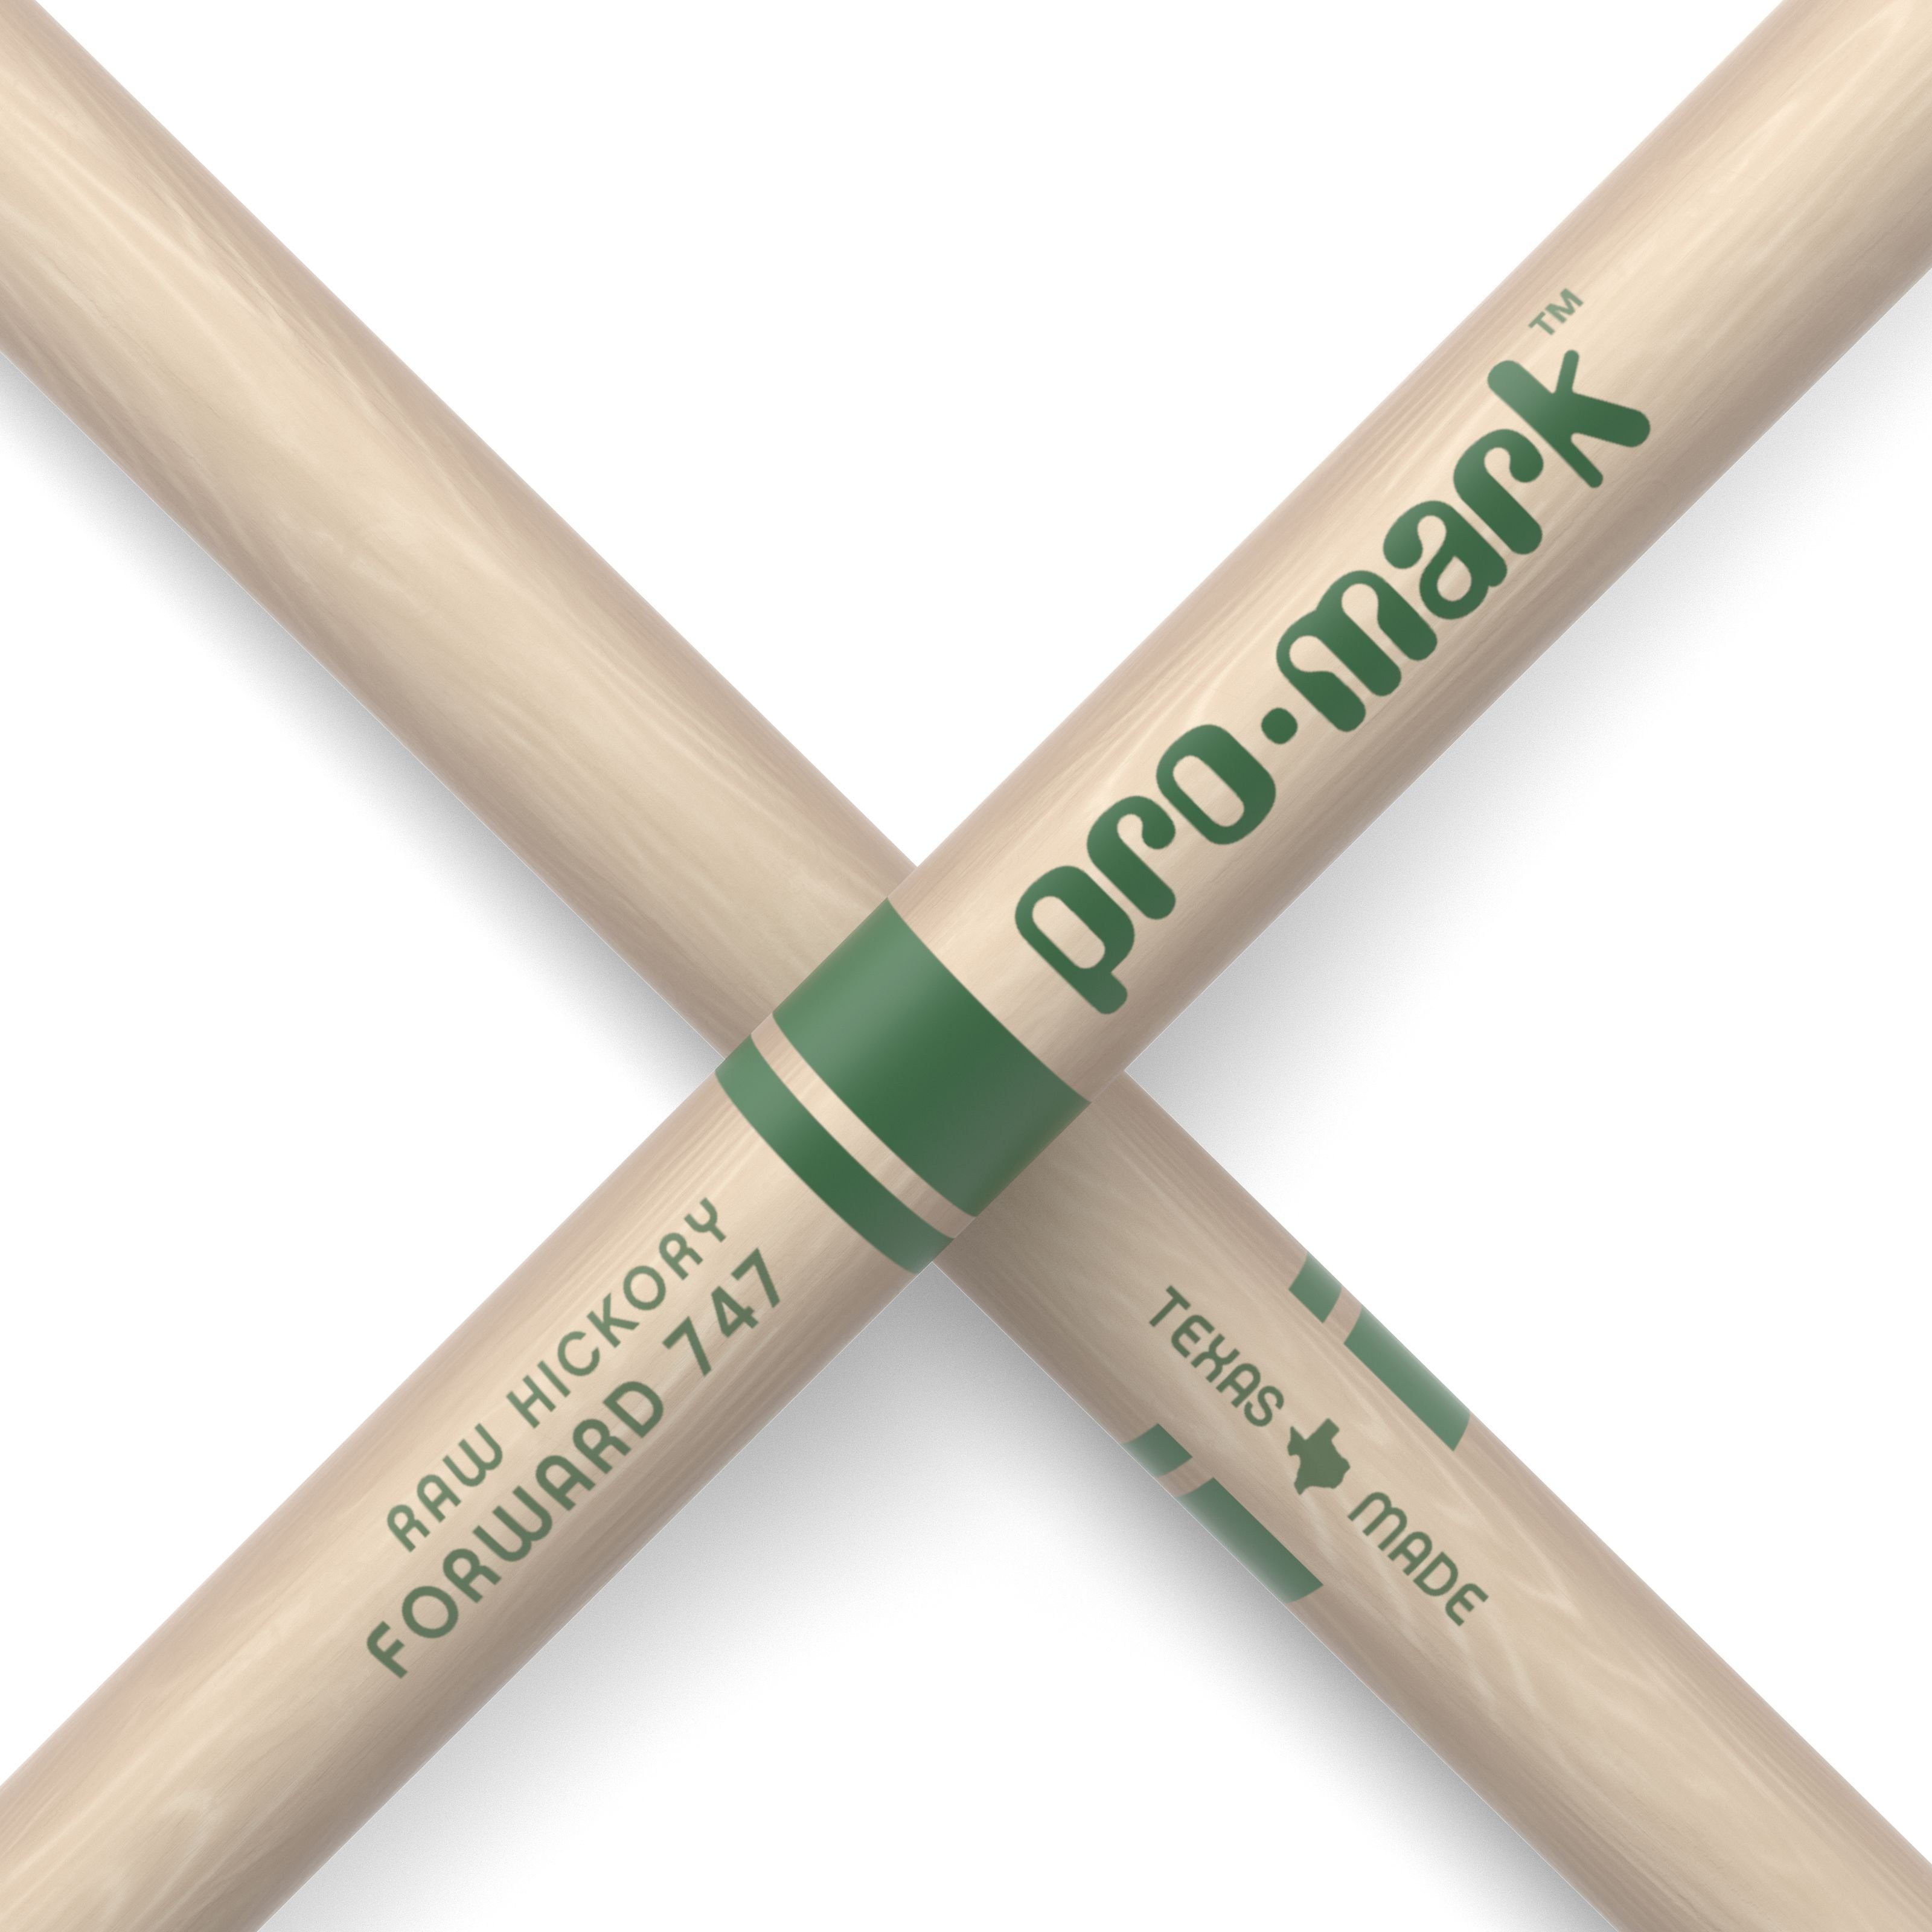 TXR747W - WoodTip Promark Natural Hickory, Paar Rock Drumstic Sticks, American Sticks Spielzeug-Musikinstrument,